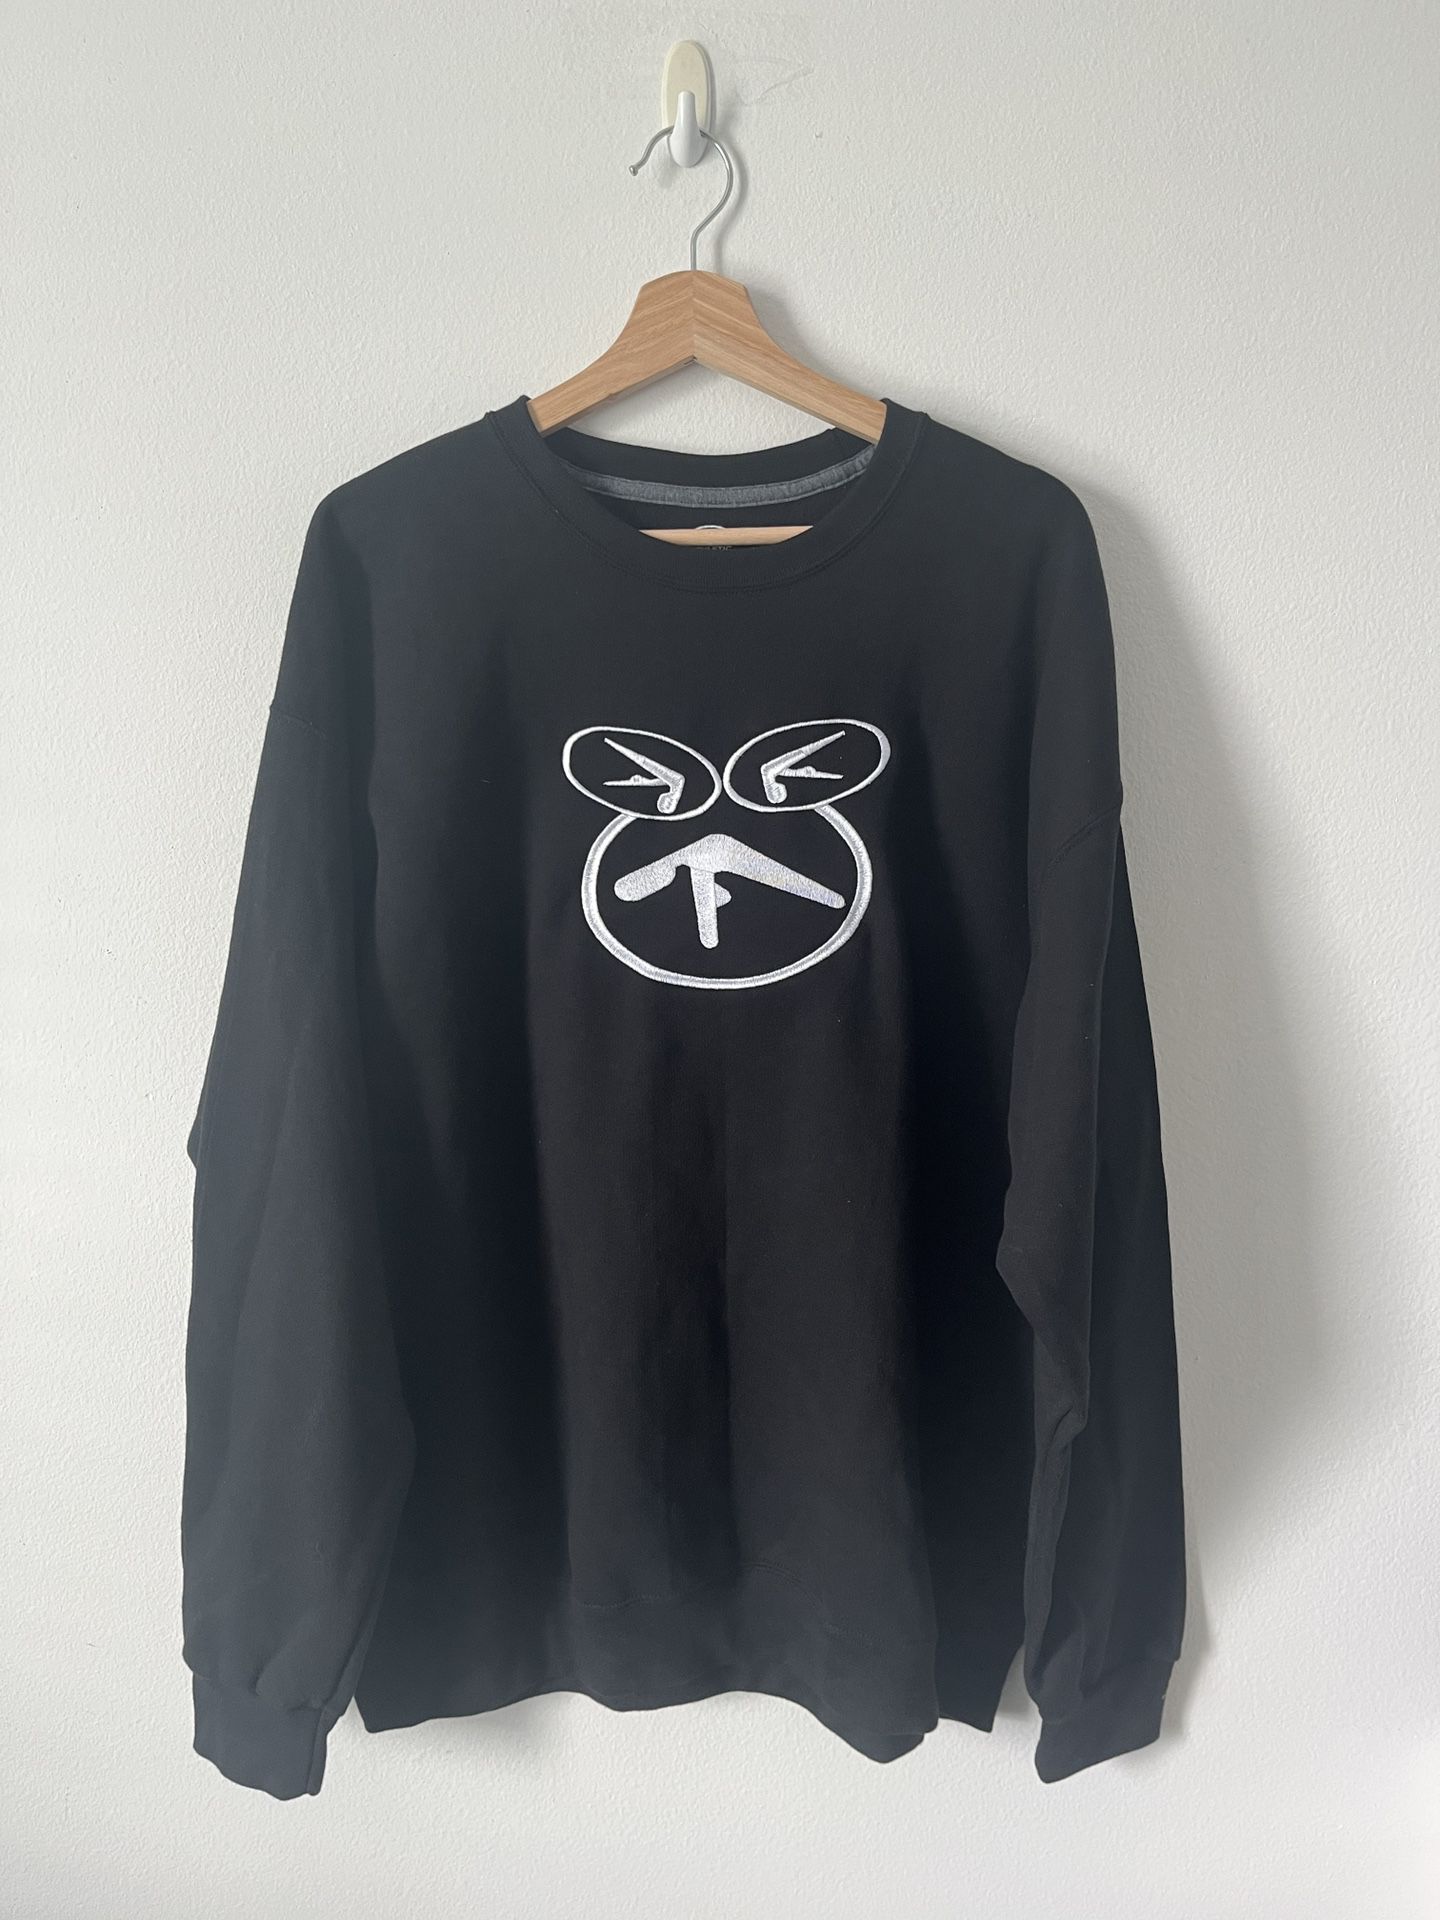 Vintage Aphex Twin Logo Crewneck Sweatshirt, Music Merch, Y2K, Rave Ambient